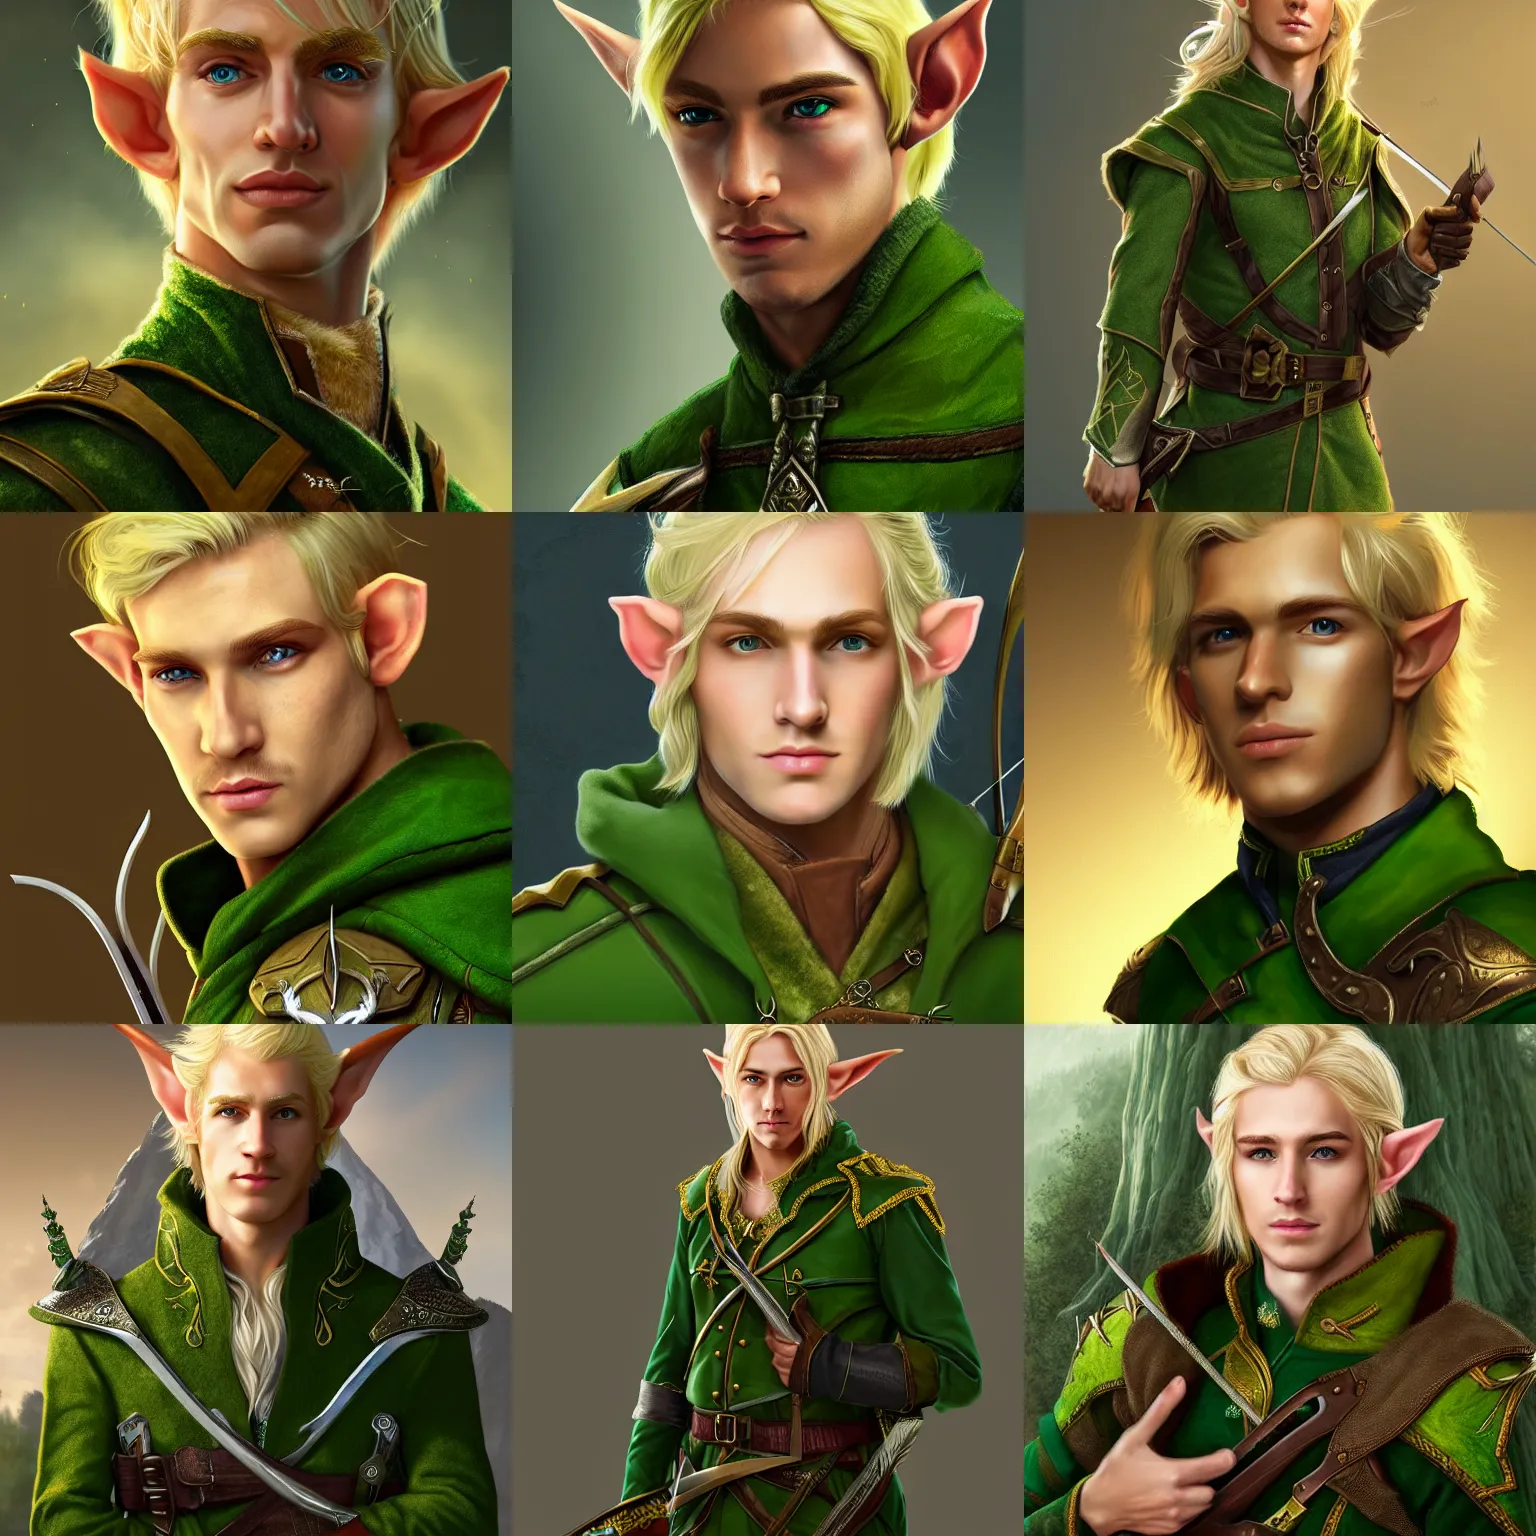 Prompt: Portrait of a Handsome blonde elven ranger in green jacket wielding two crossbows. ArtStation, Fantasy, 8K, Highly Detailed.